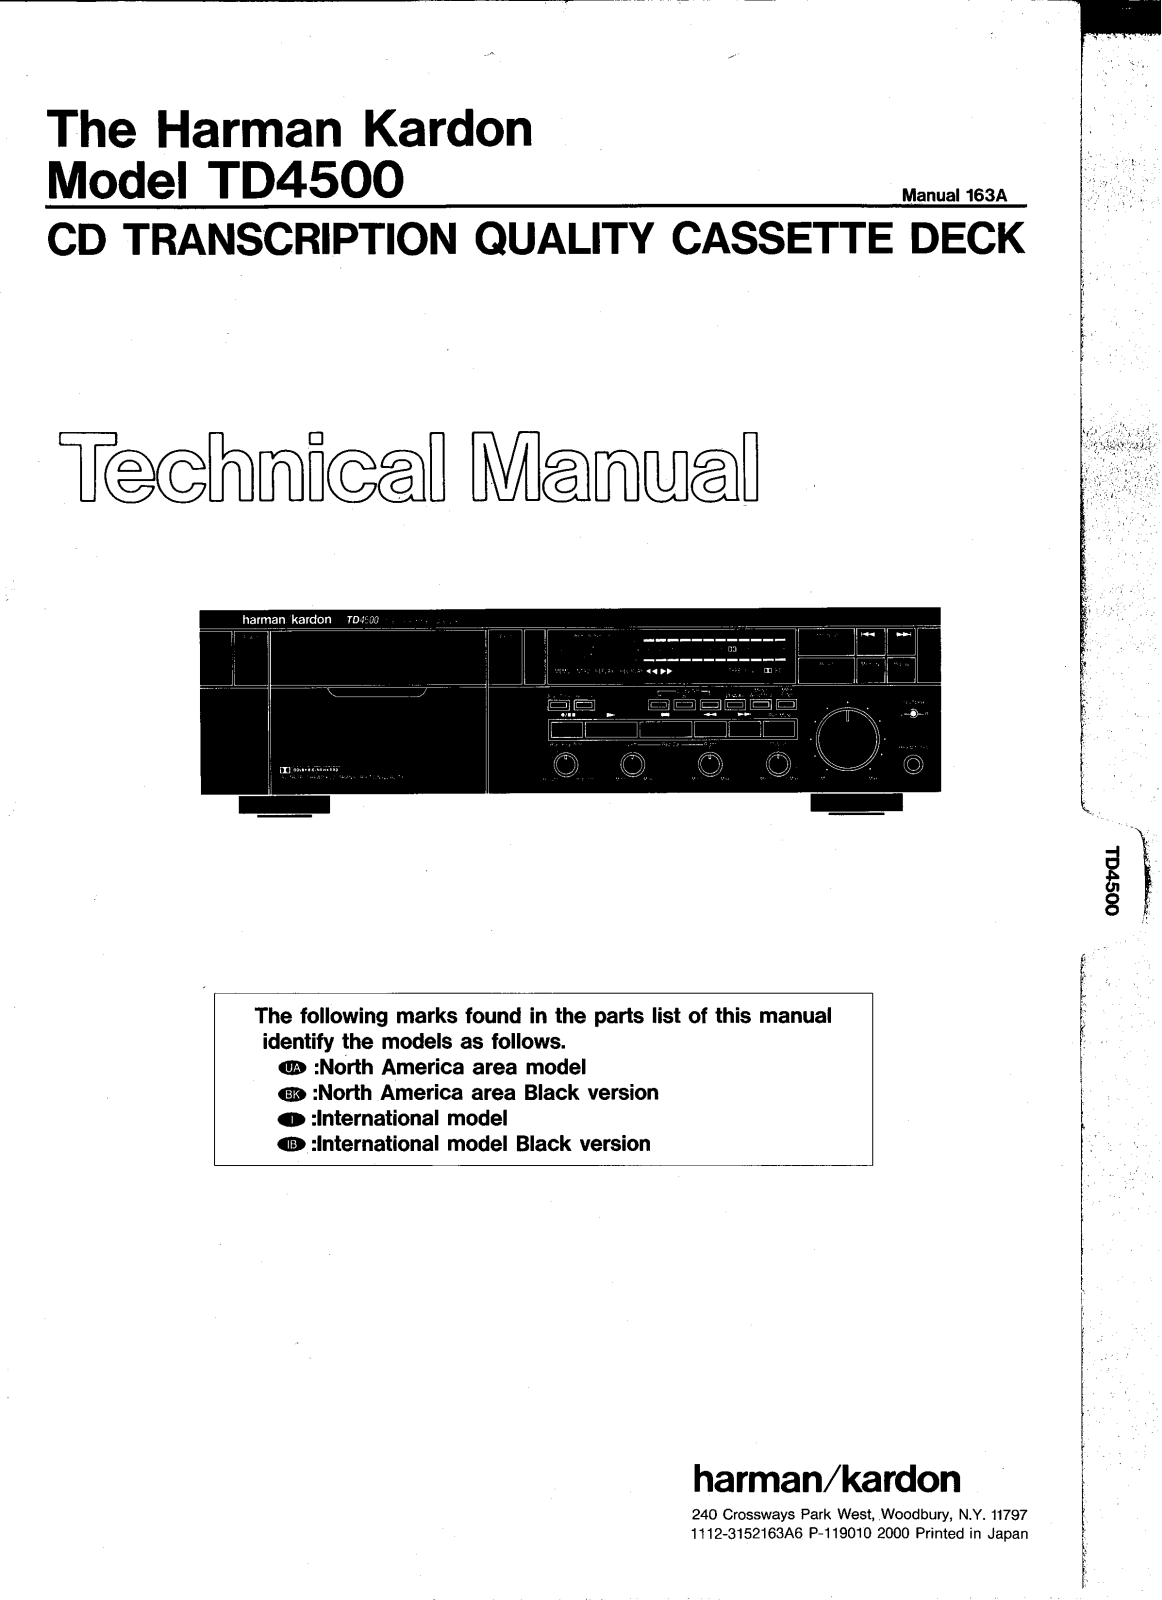 Harman Kardon TD-4500 Service manual